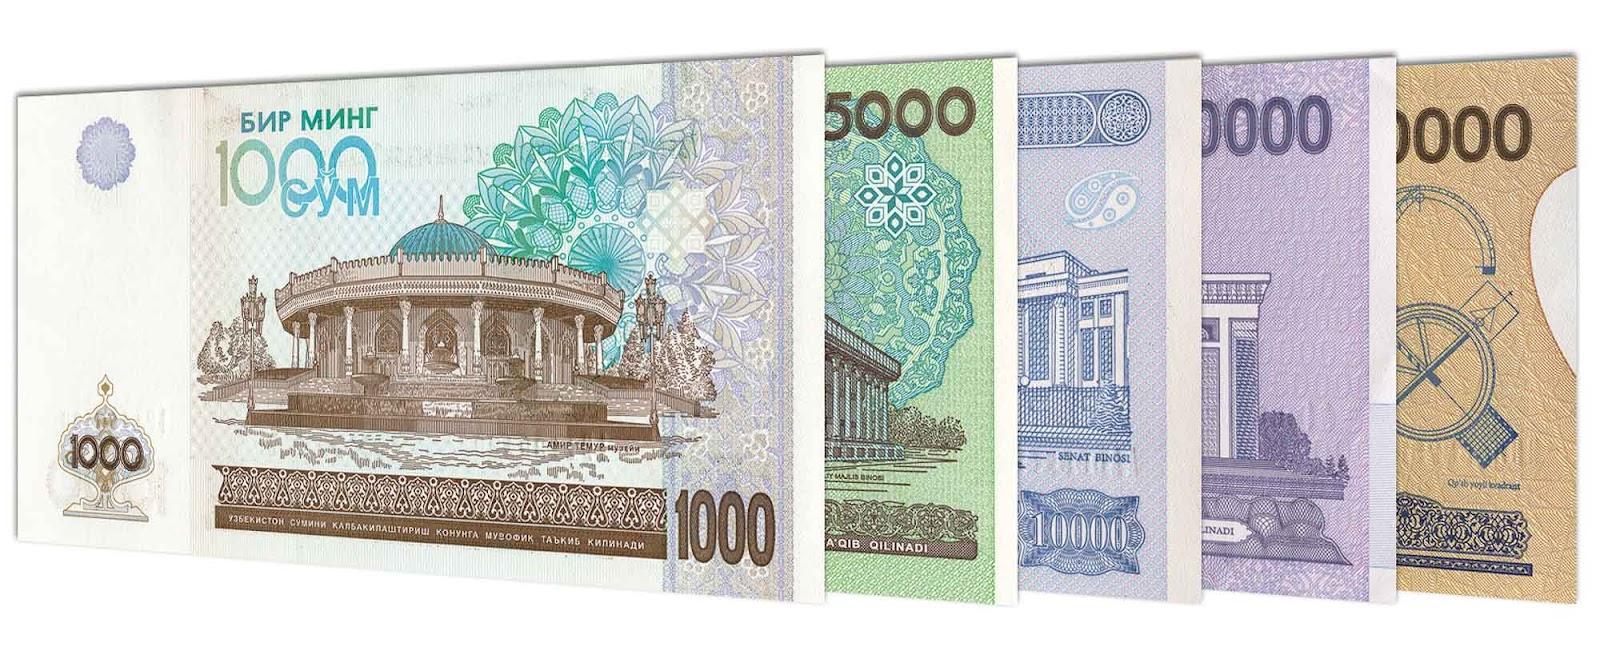 Current Uzbekistani So'm banknote series.